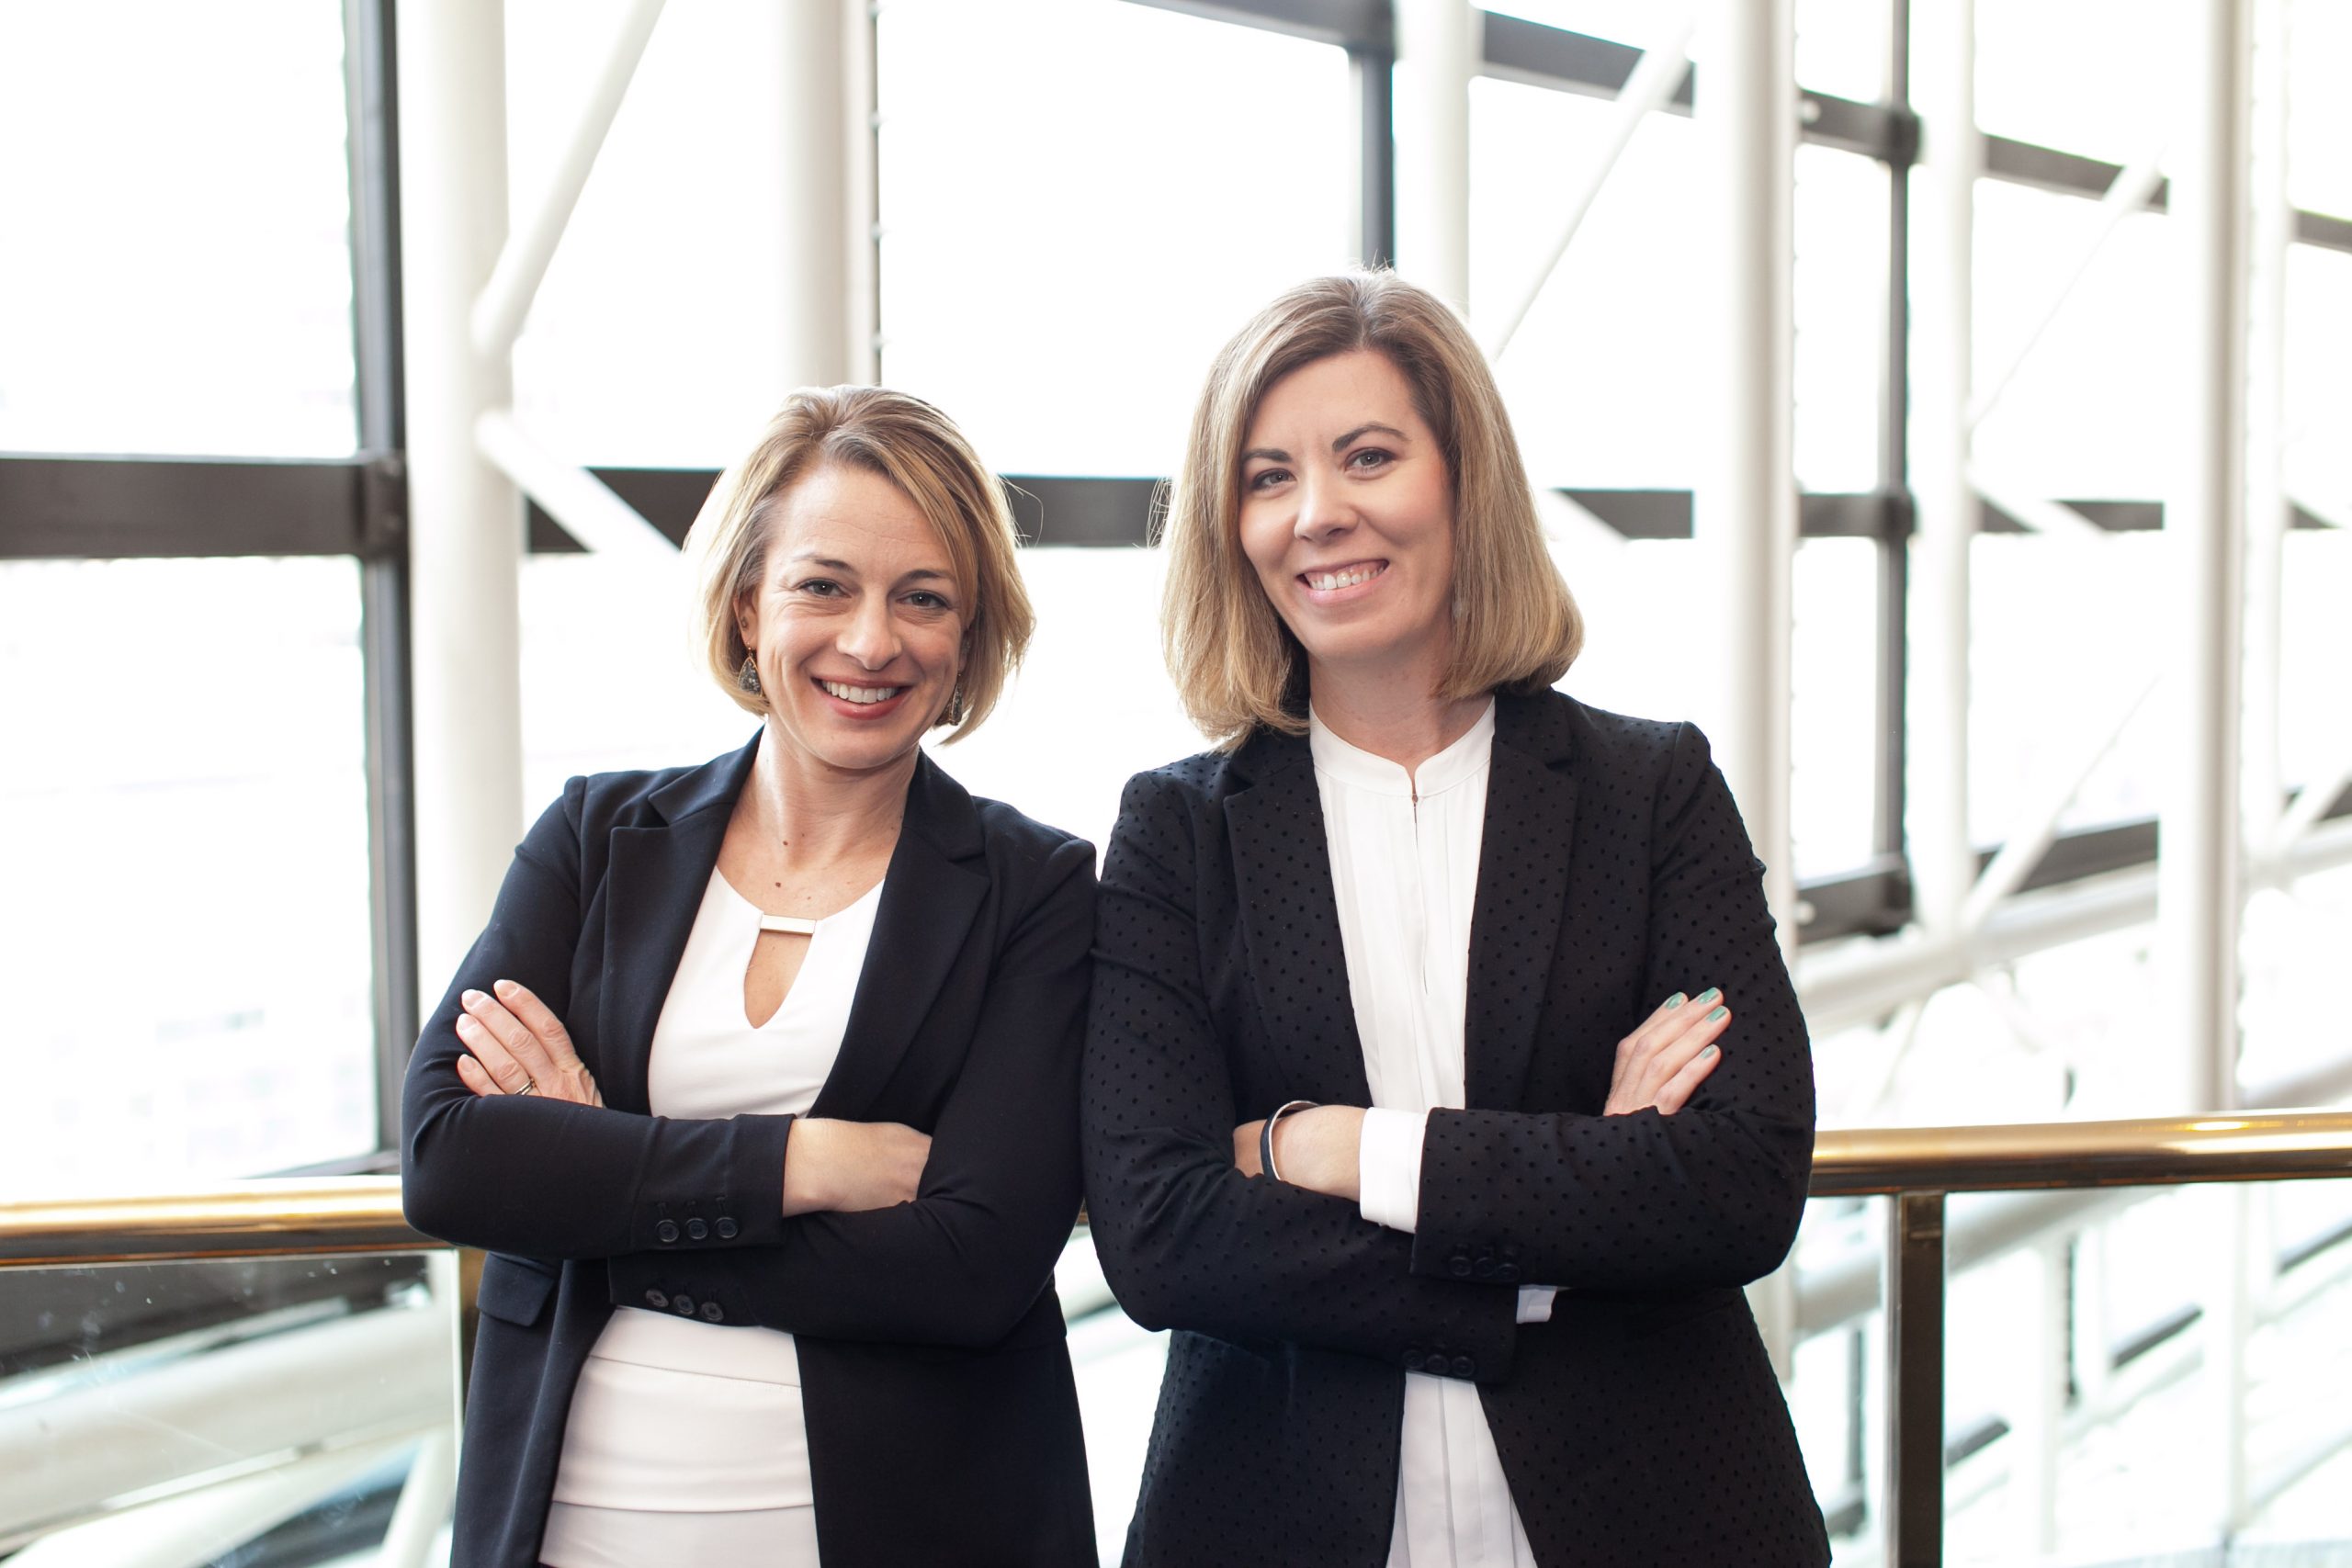 Women in Leadership: Jennifer K. Muir and Charli K. Matthews